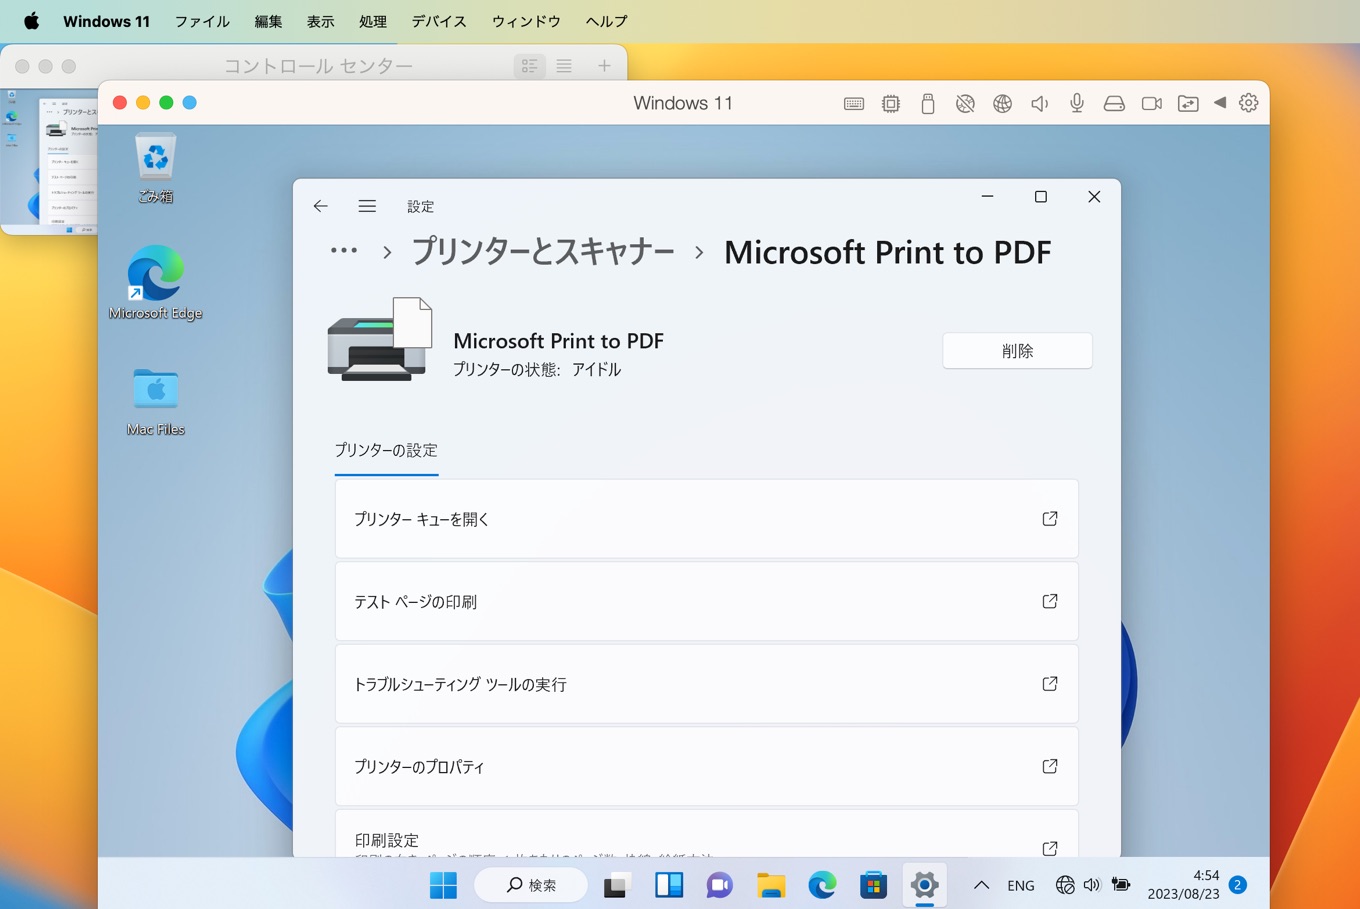 Microsoft Print to PDF on Windows VM using Parallels Desktop v19